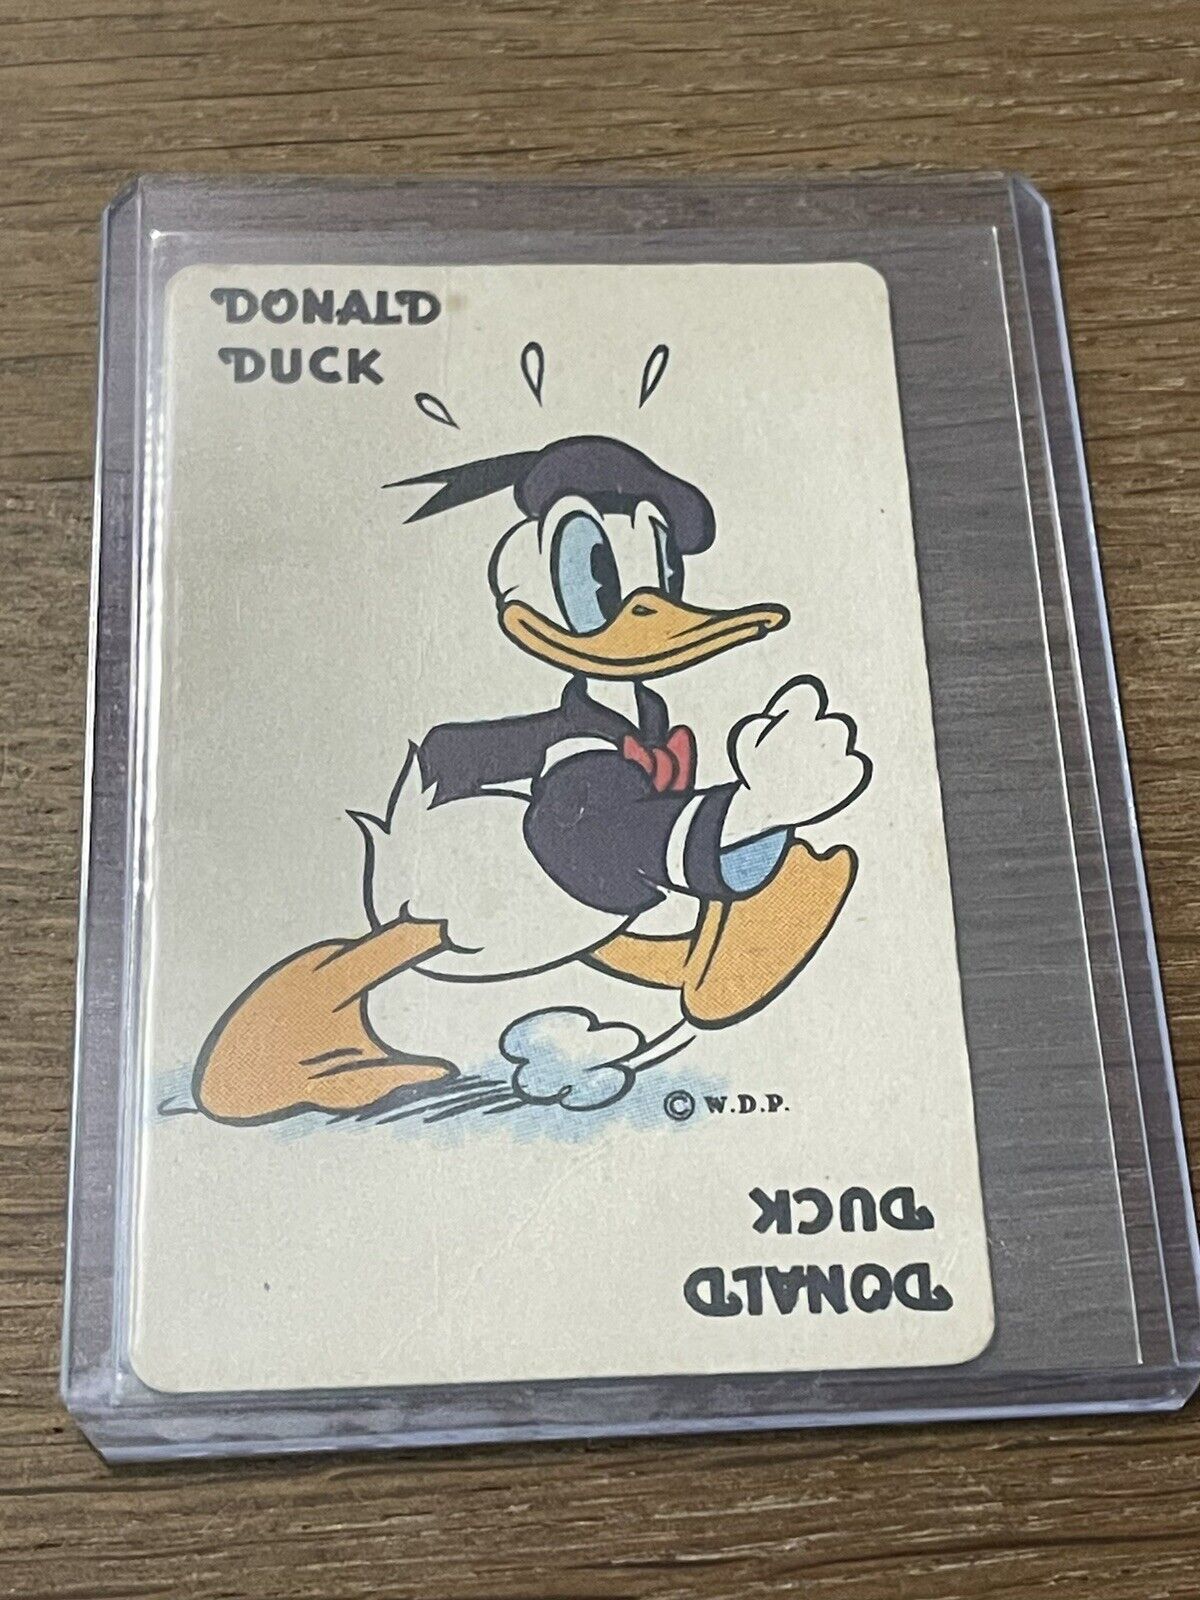 1941 WALT DISNEY WHITMAN DONALD DUCK OLD MAID CARD GAME CARD RARE DISNEYANA